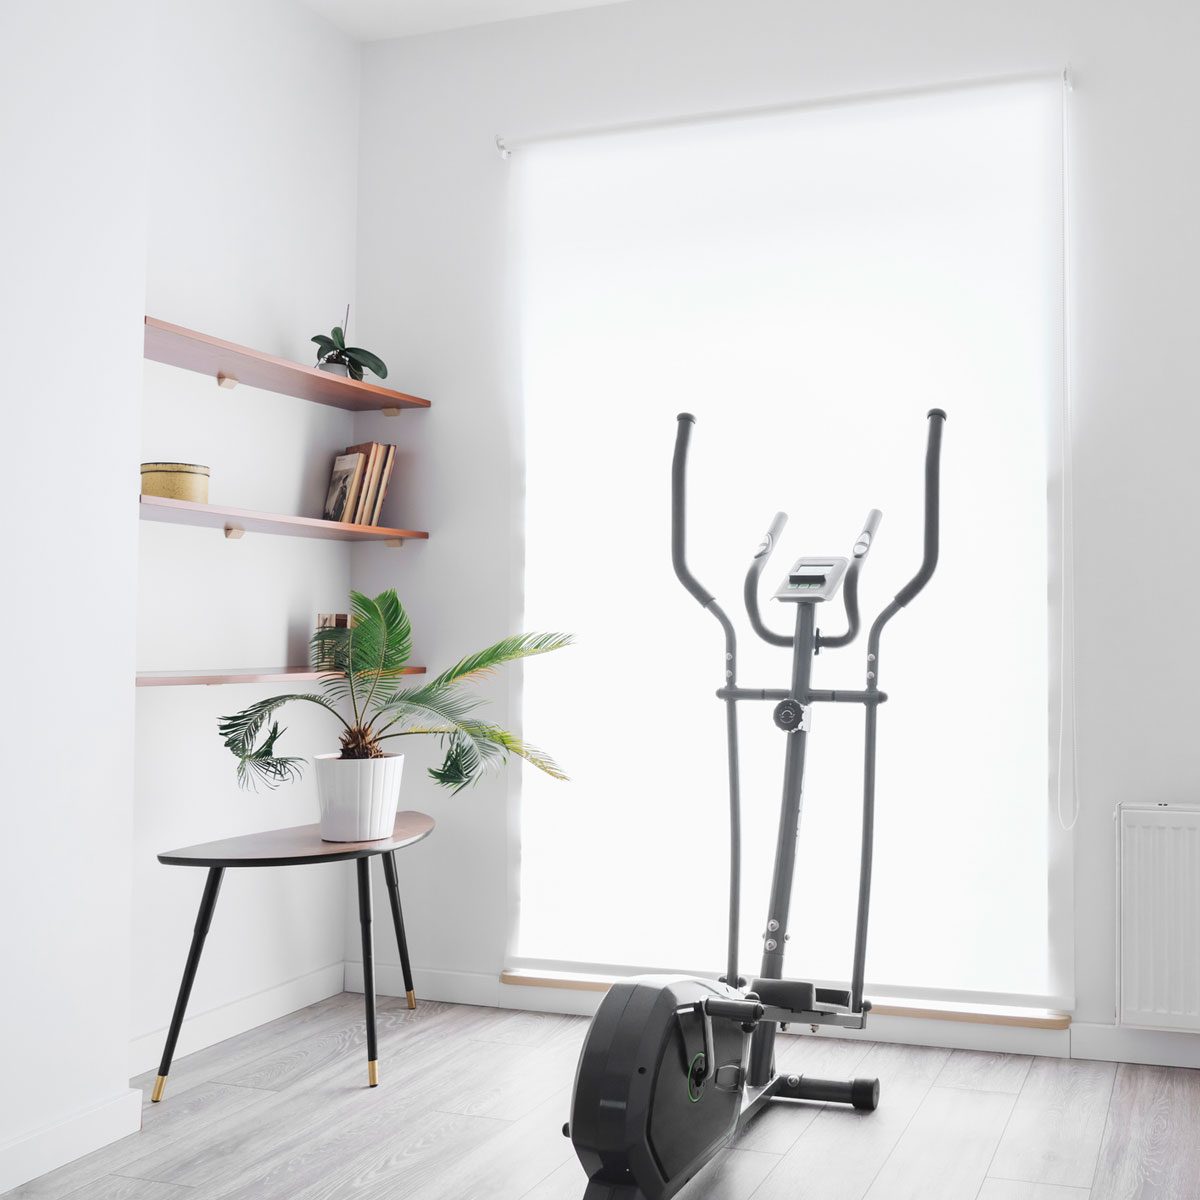 Home Gym Decor: 10 Ideas to Consider | The Family Handyman